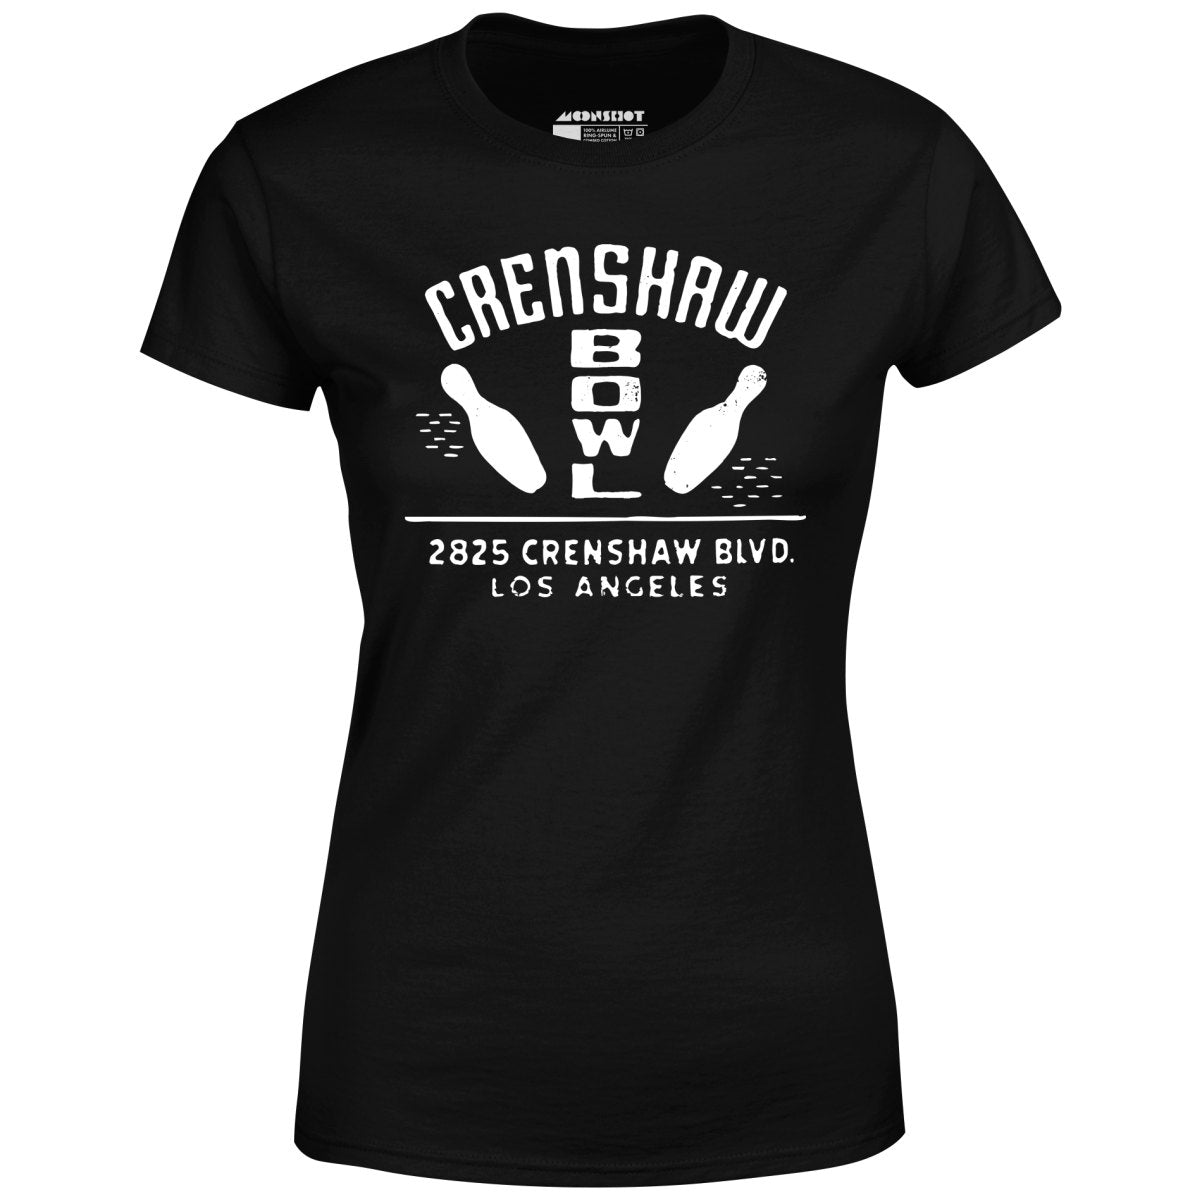 Crenshaw Bowl - Los Angeles, CA - Vintage Bowling Alley - Women's T-Shirt